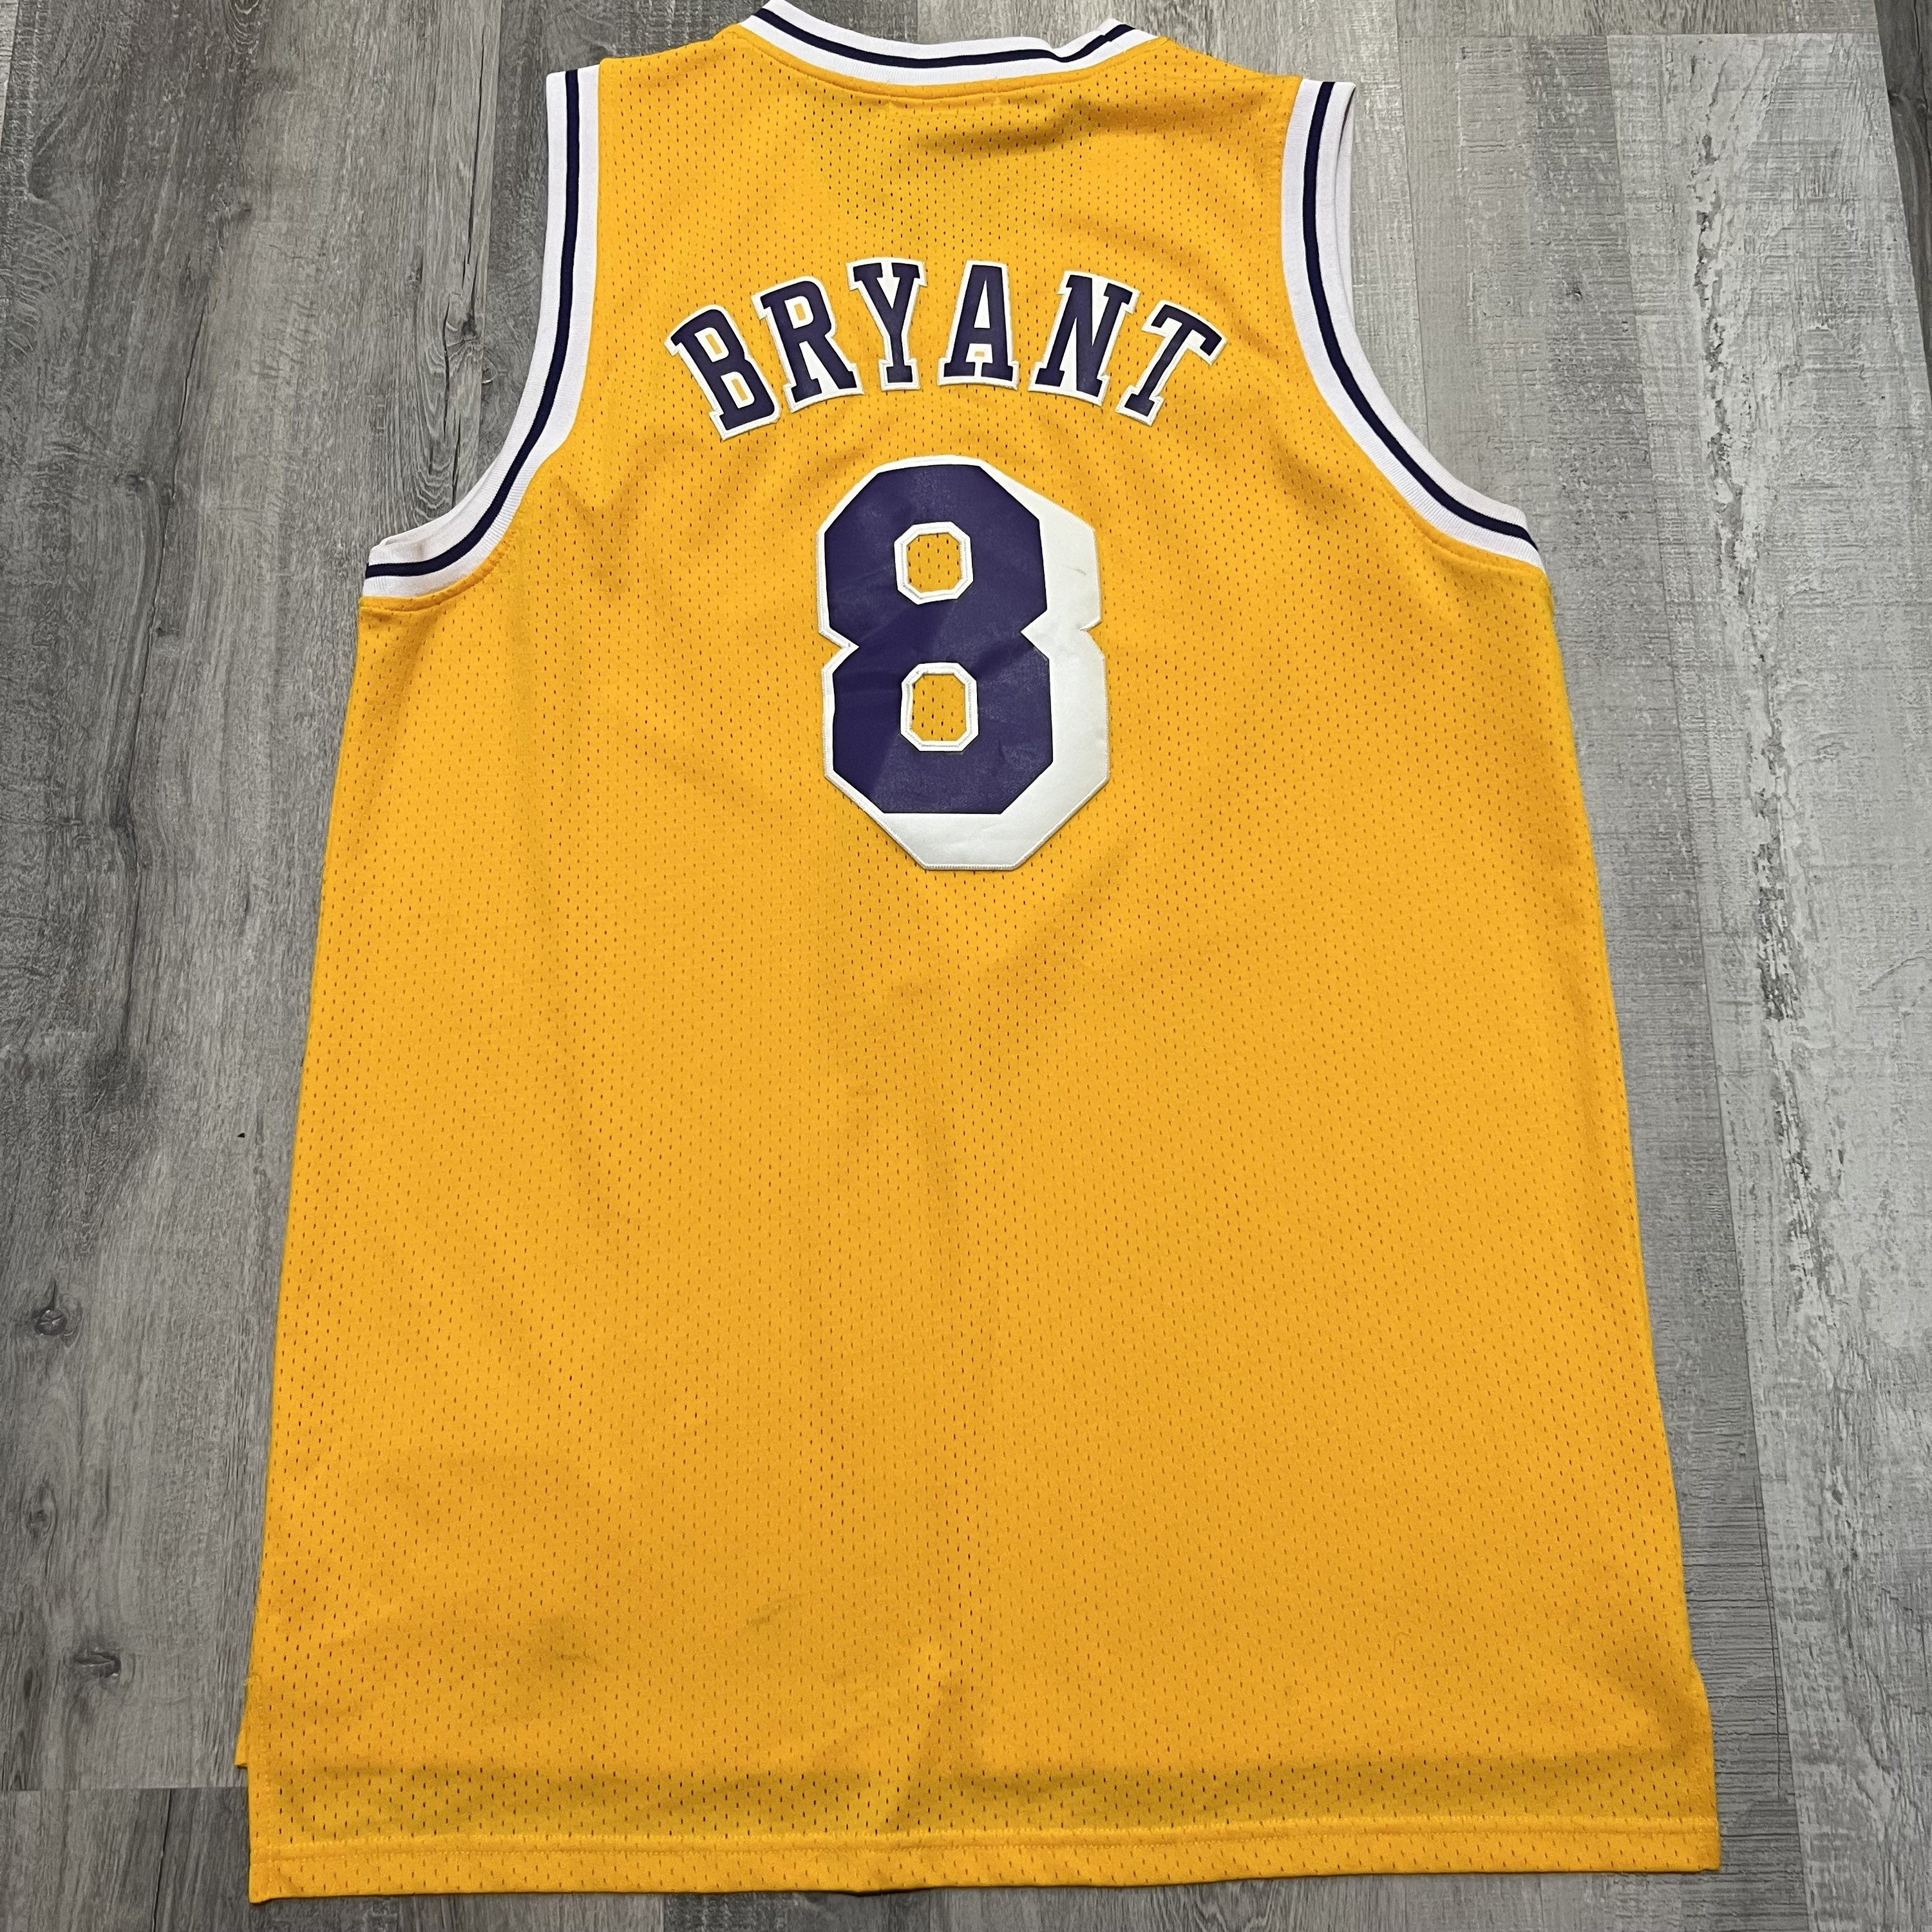 Adidas Kobe Bryant 8 Lakers Blue Stars Jersey XL hardwood classic